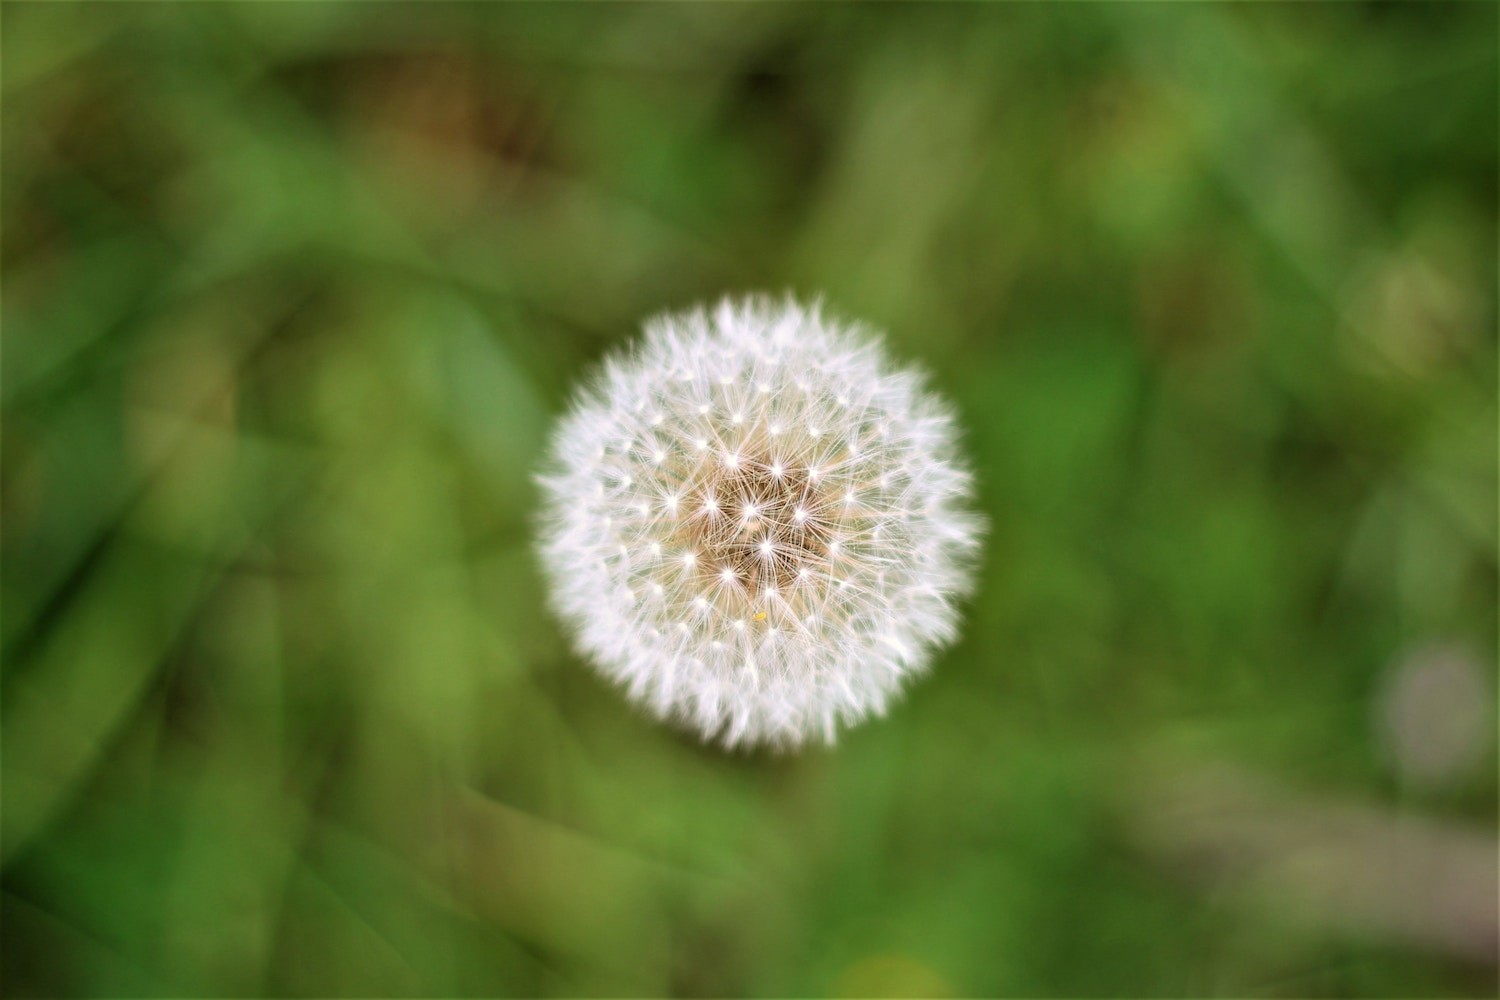 Dandelion in grass